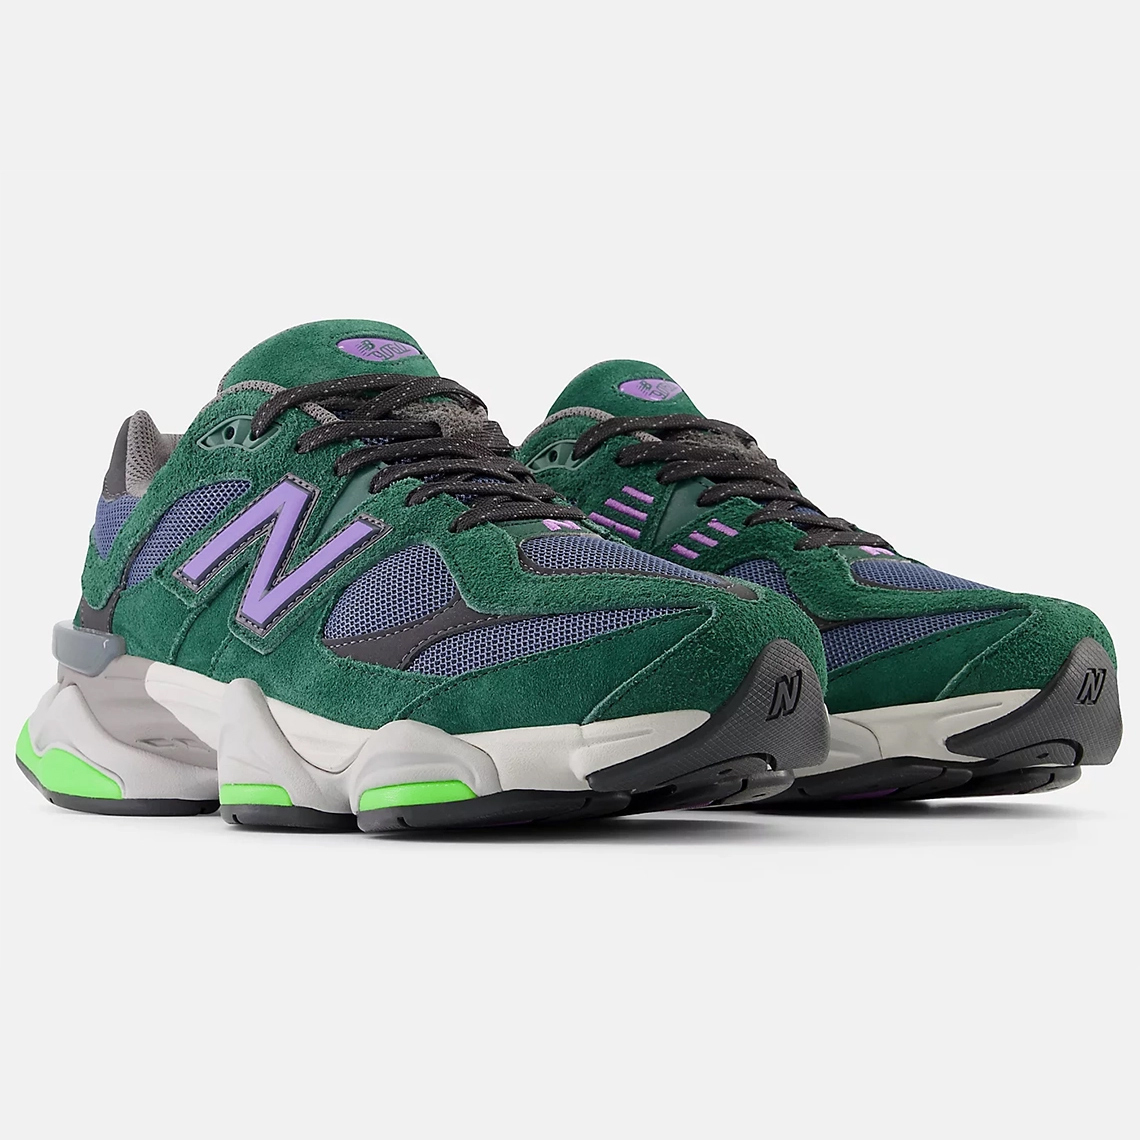 New Balance 9060 “Nightwatch Green” U9060GRE